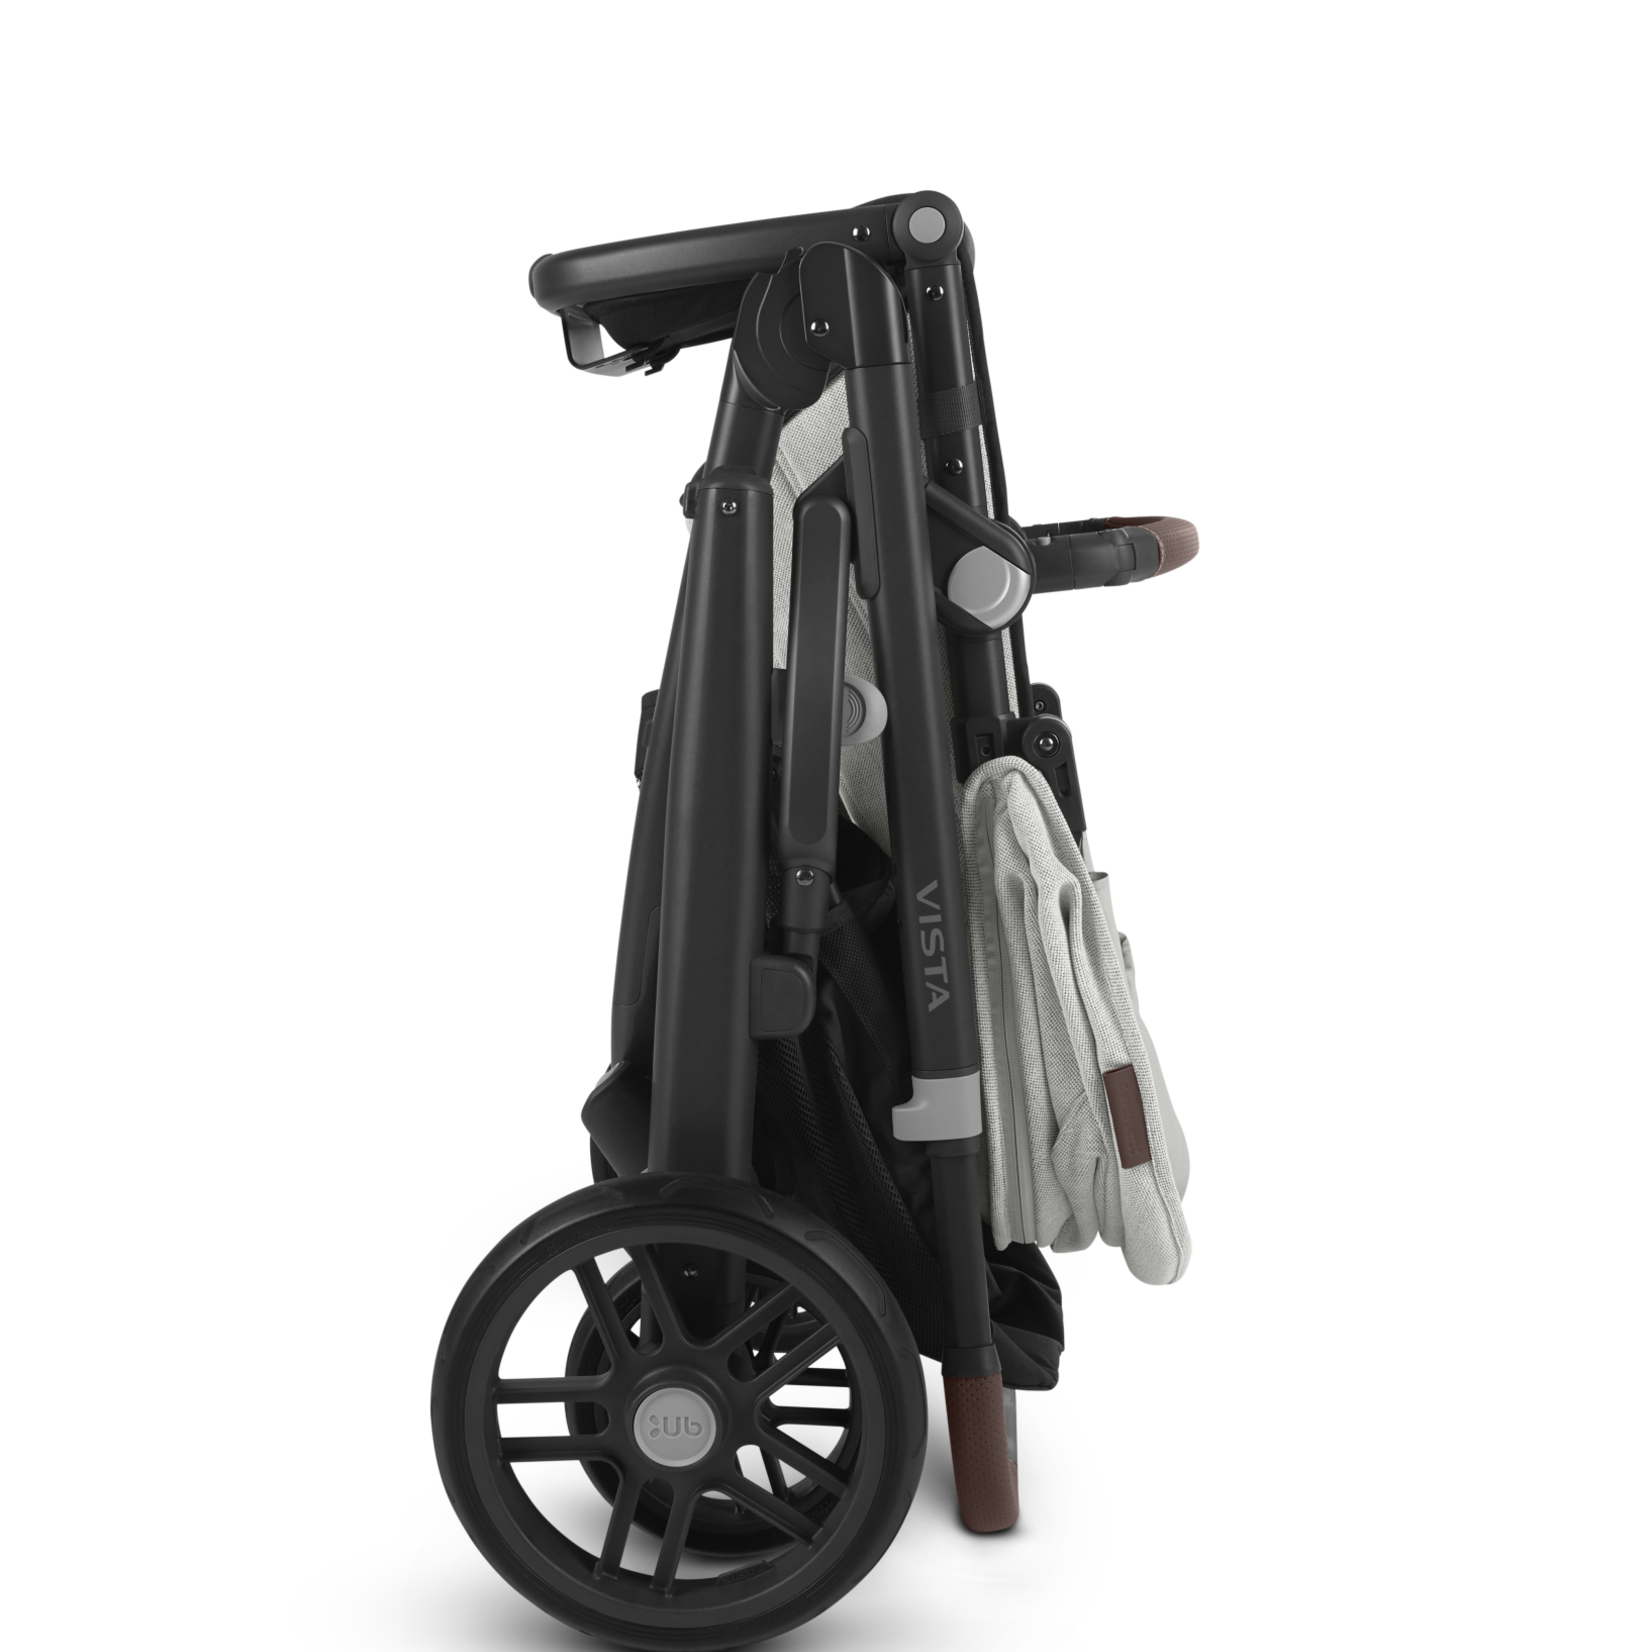 Uppababy VISTA V2 Stroller With Bassinet - ANTHONY (white & grey chenille/carbon/chestnut leather)